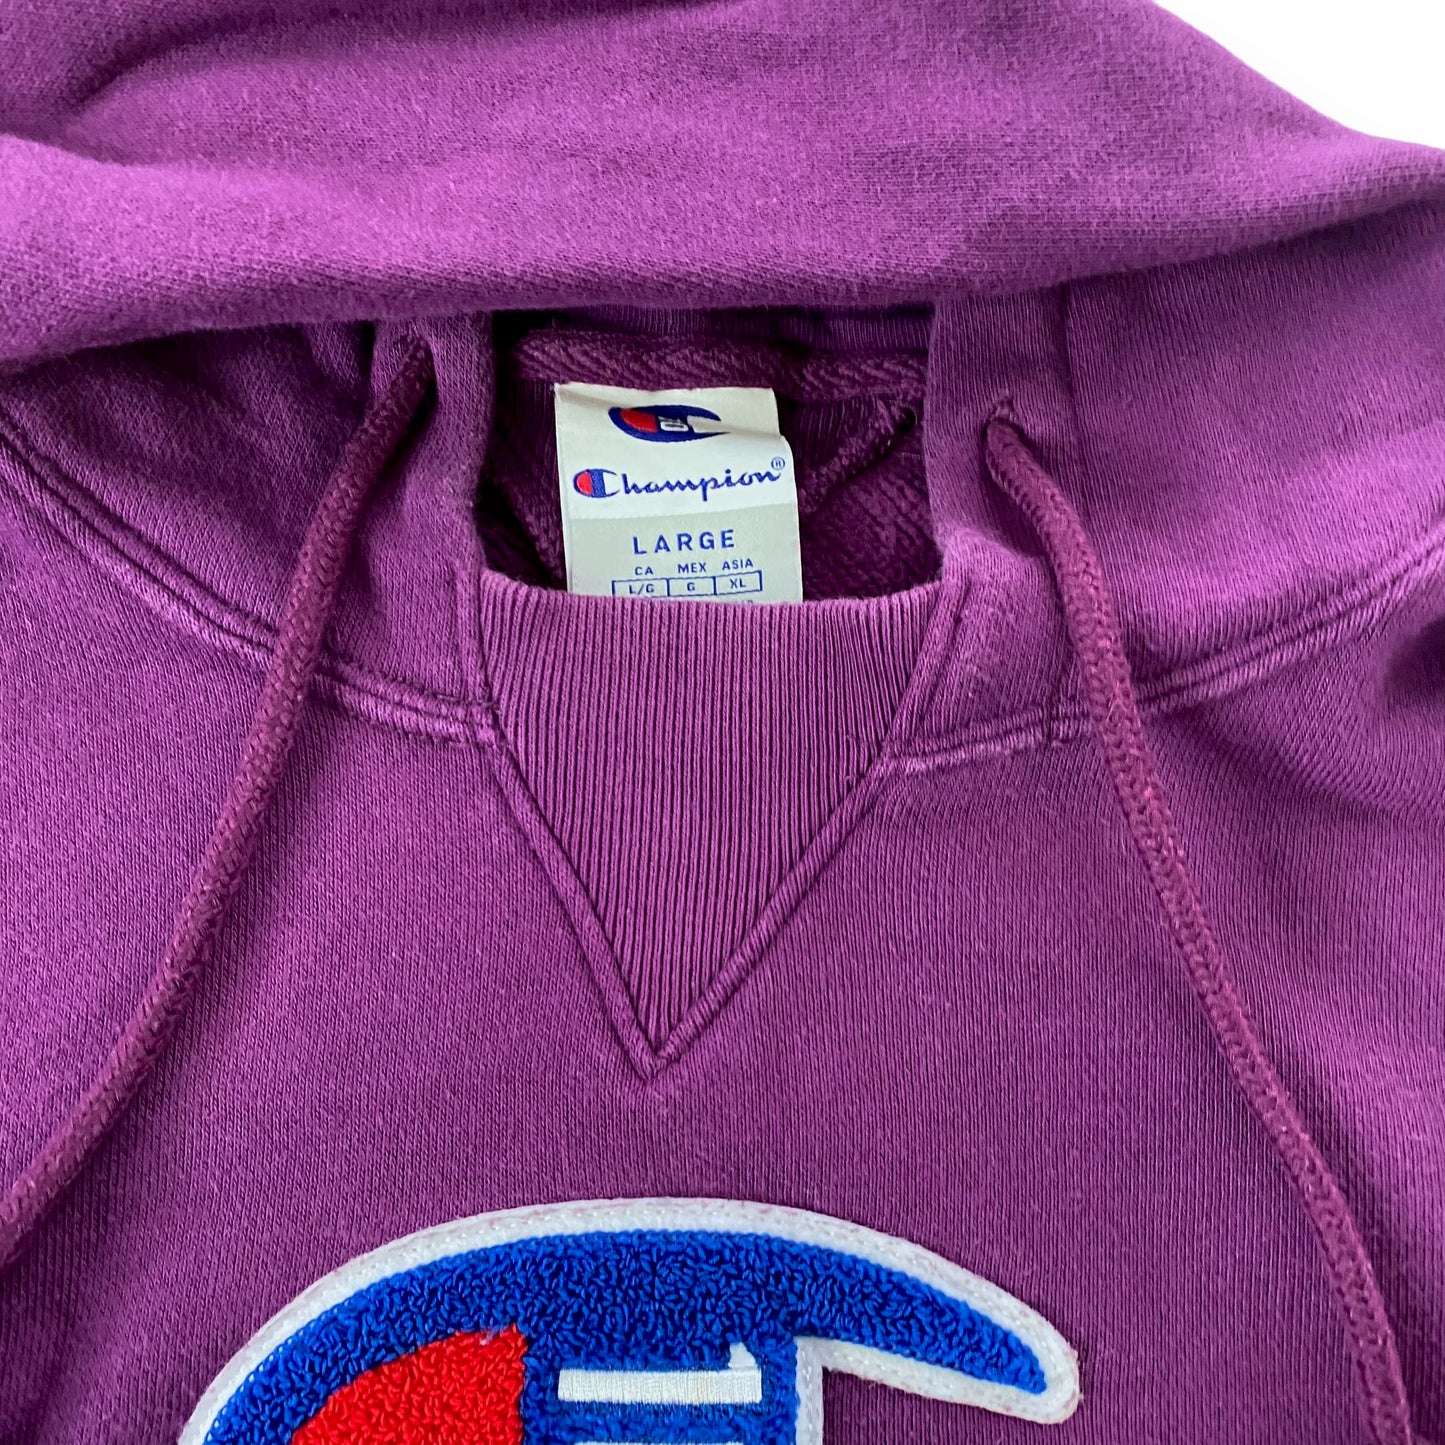 purple hoodie Champion / Size L